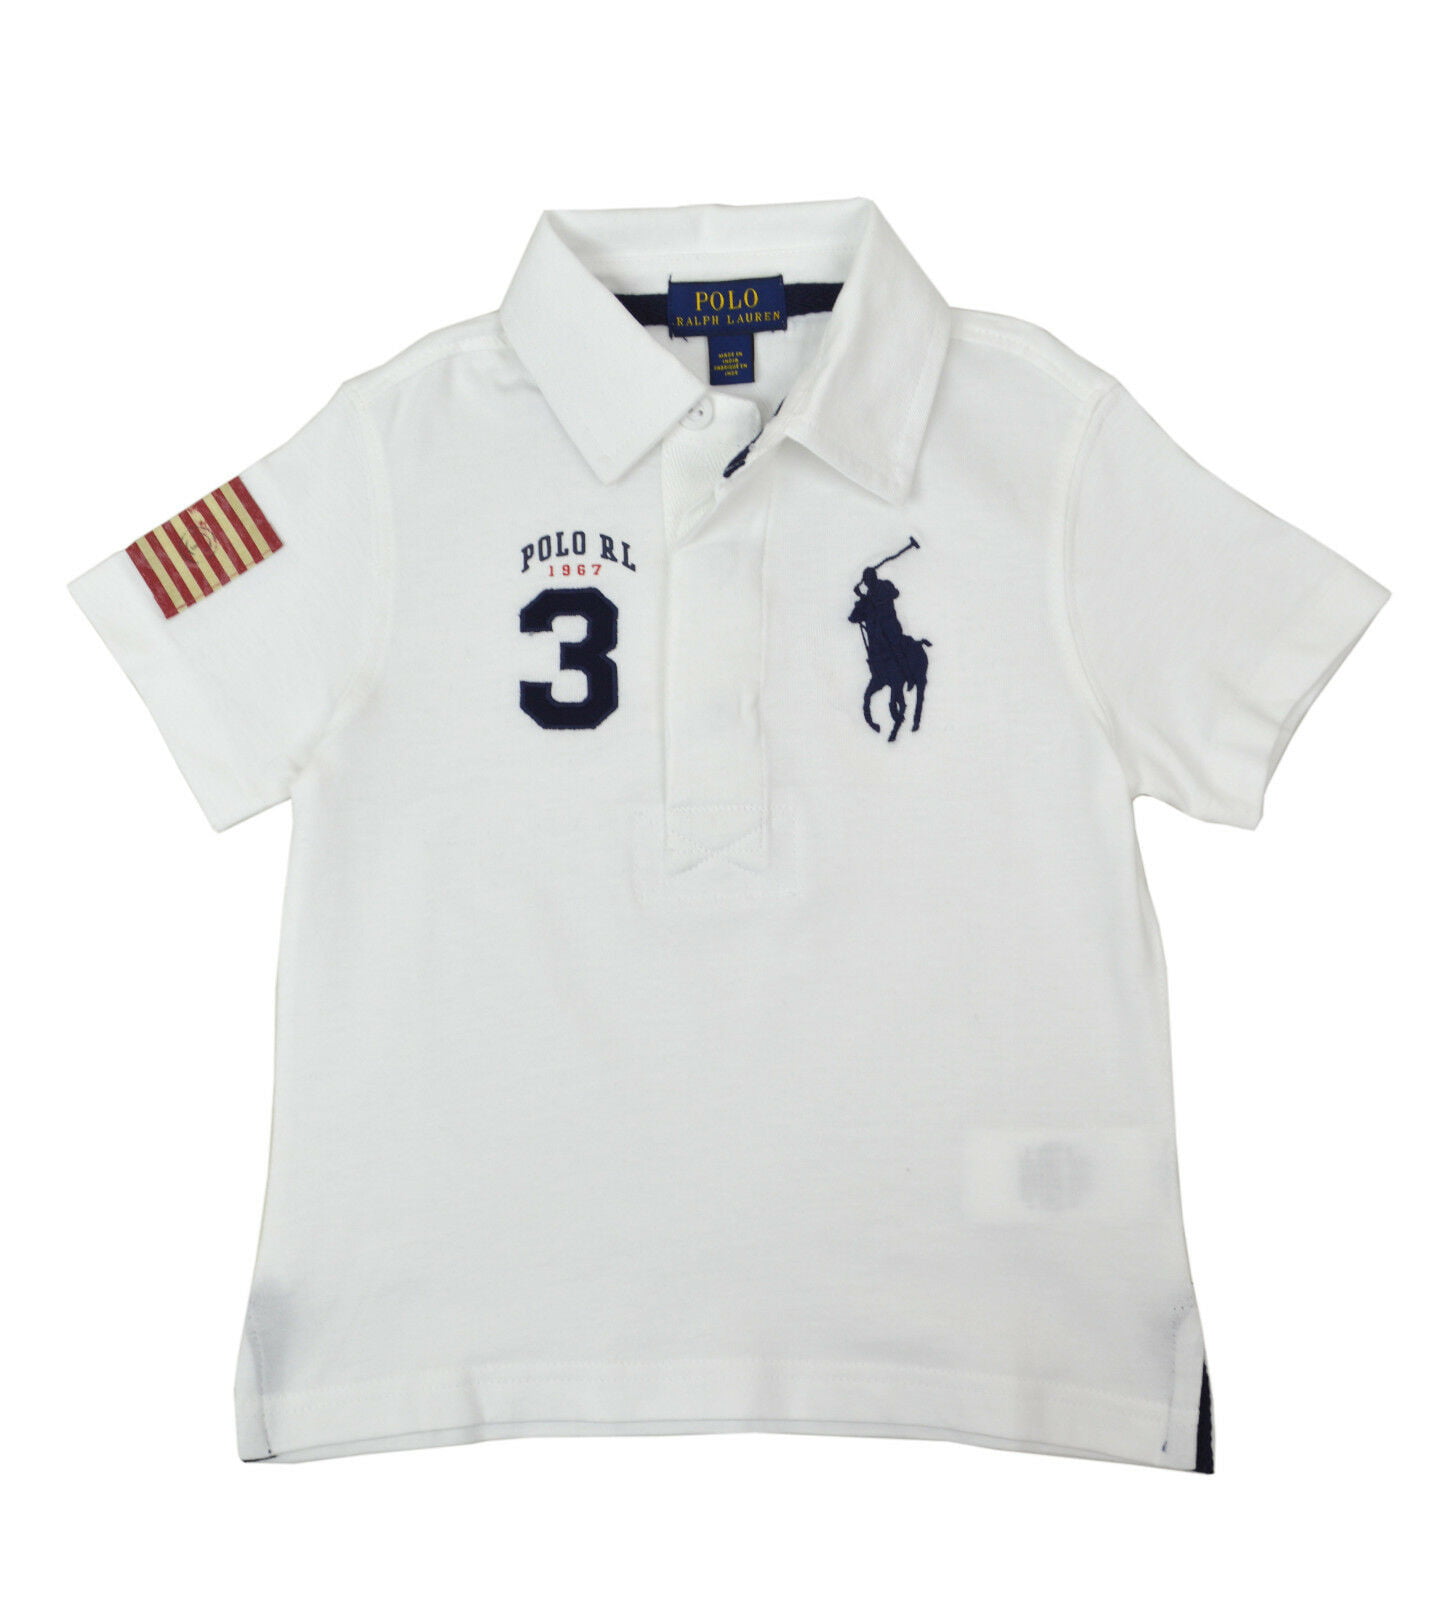 New Polo Ralph Lauren Boys White Blue USA Big Pony Polo Shirt L Large 14-16  9185-3 